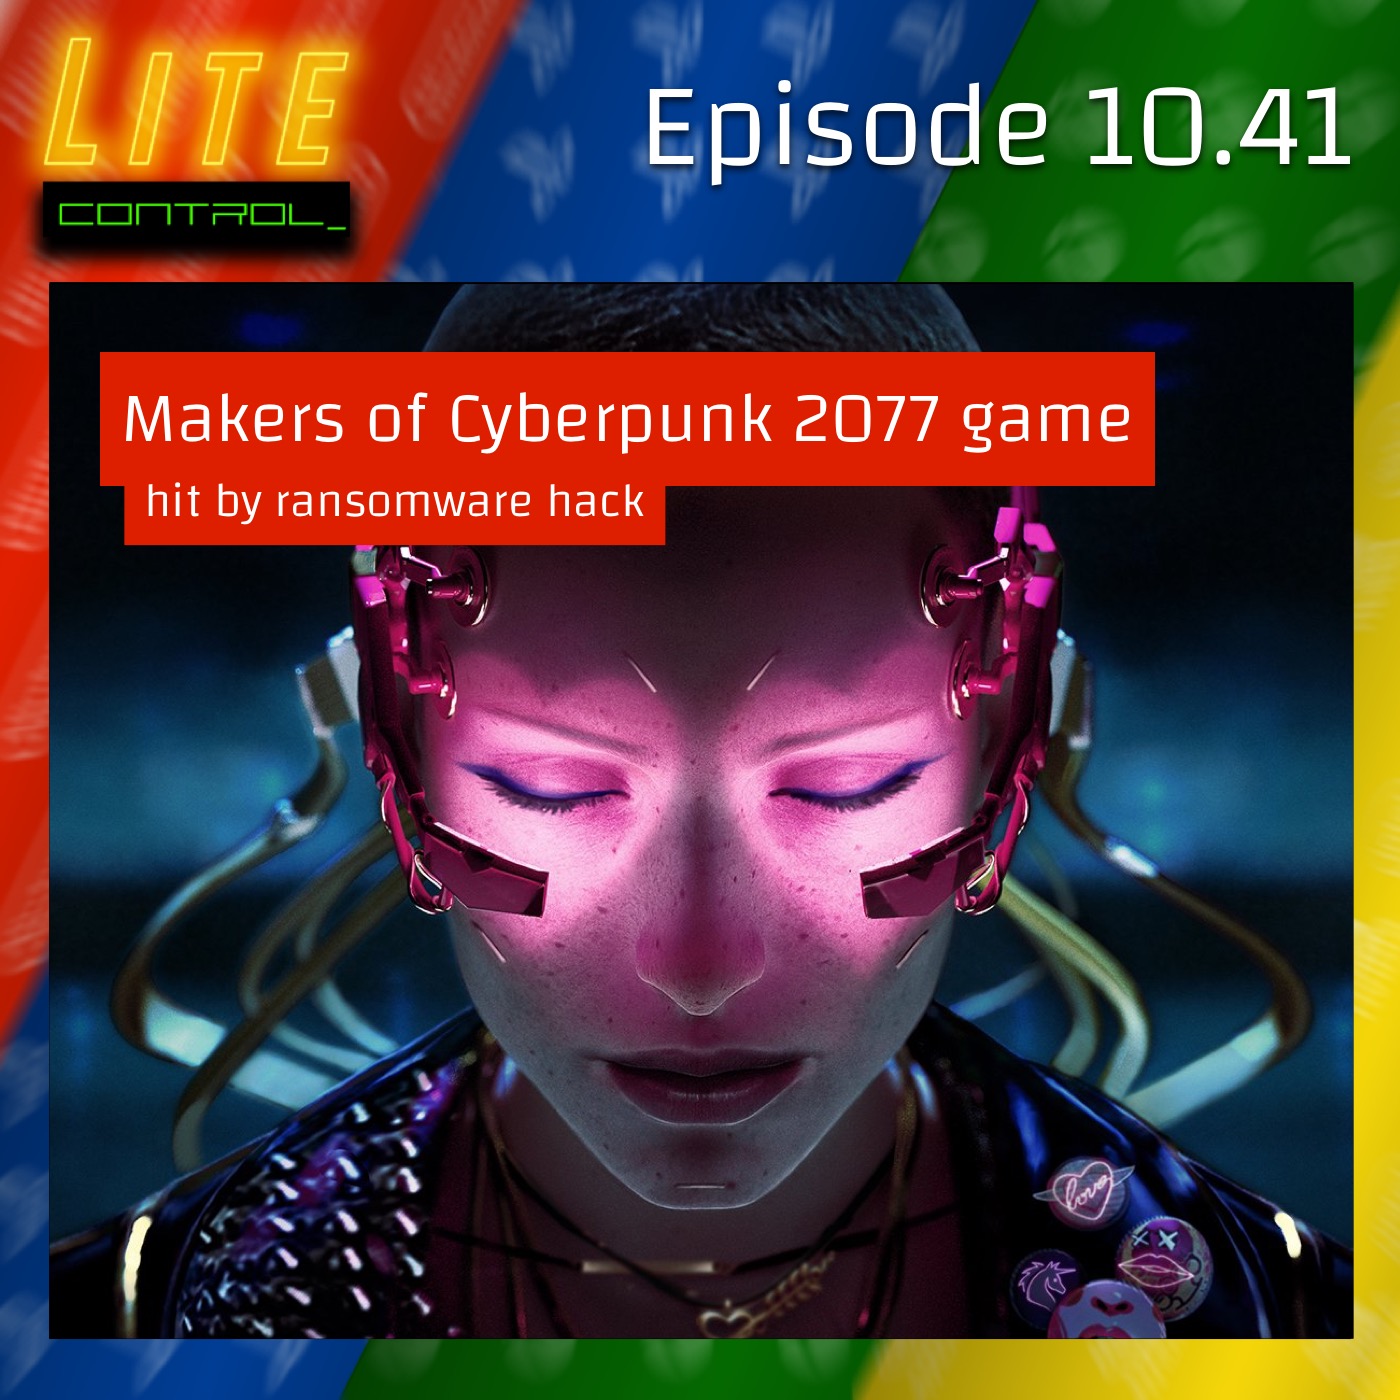 Lite Control 10.41 - Cyberpunk 2077 Dev Servers Got Hacked with Ransomware